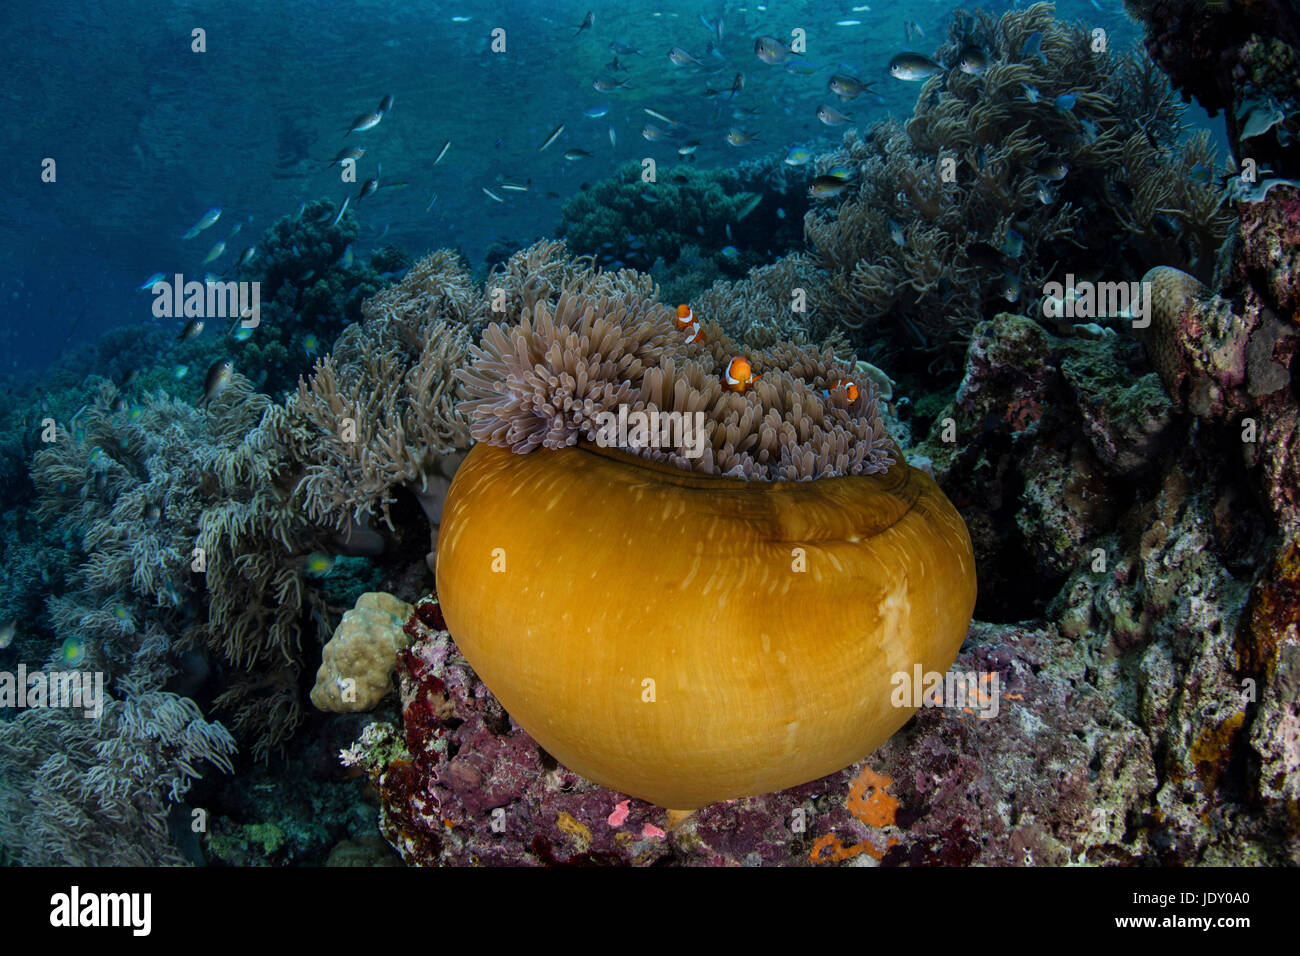 Clown Anemonefish in Magnificent Sea Anemone, Amphiprion ocellaris, Melanesia, Pacific Ocean, Solomon Islands Stock Photo